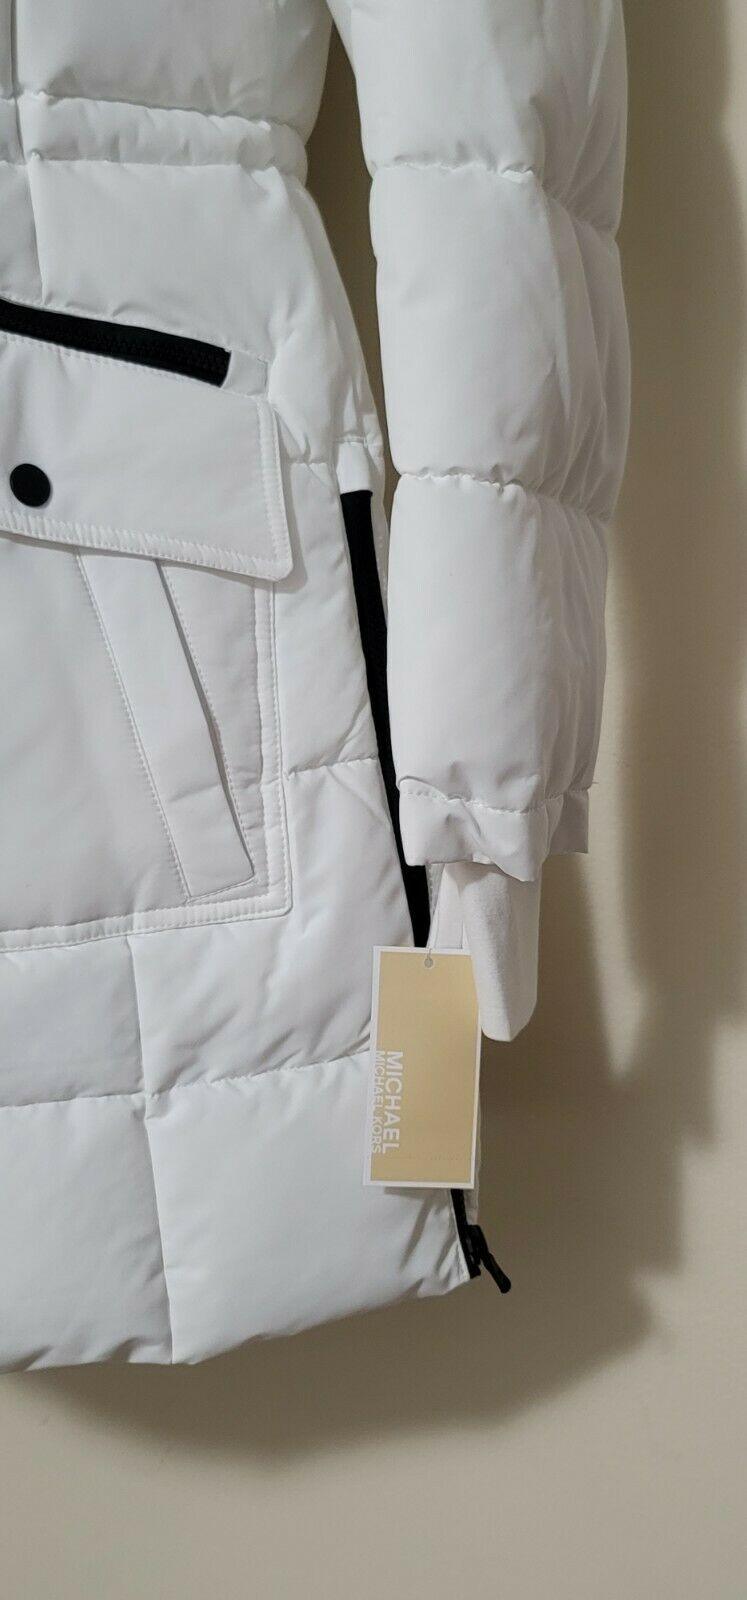 Michael Kors White Winter Jacket  Hooded Coat Size M - SVNYFancy